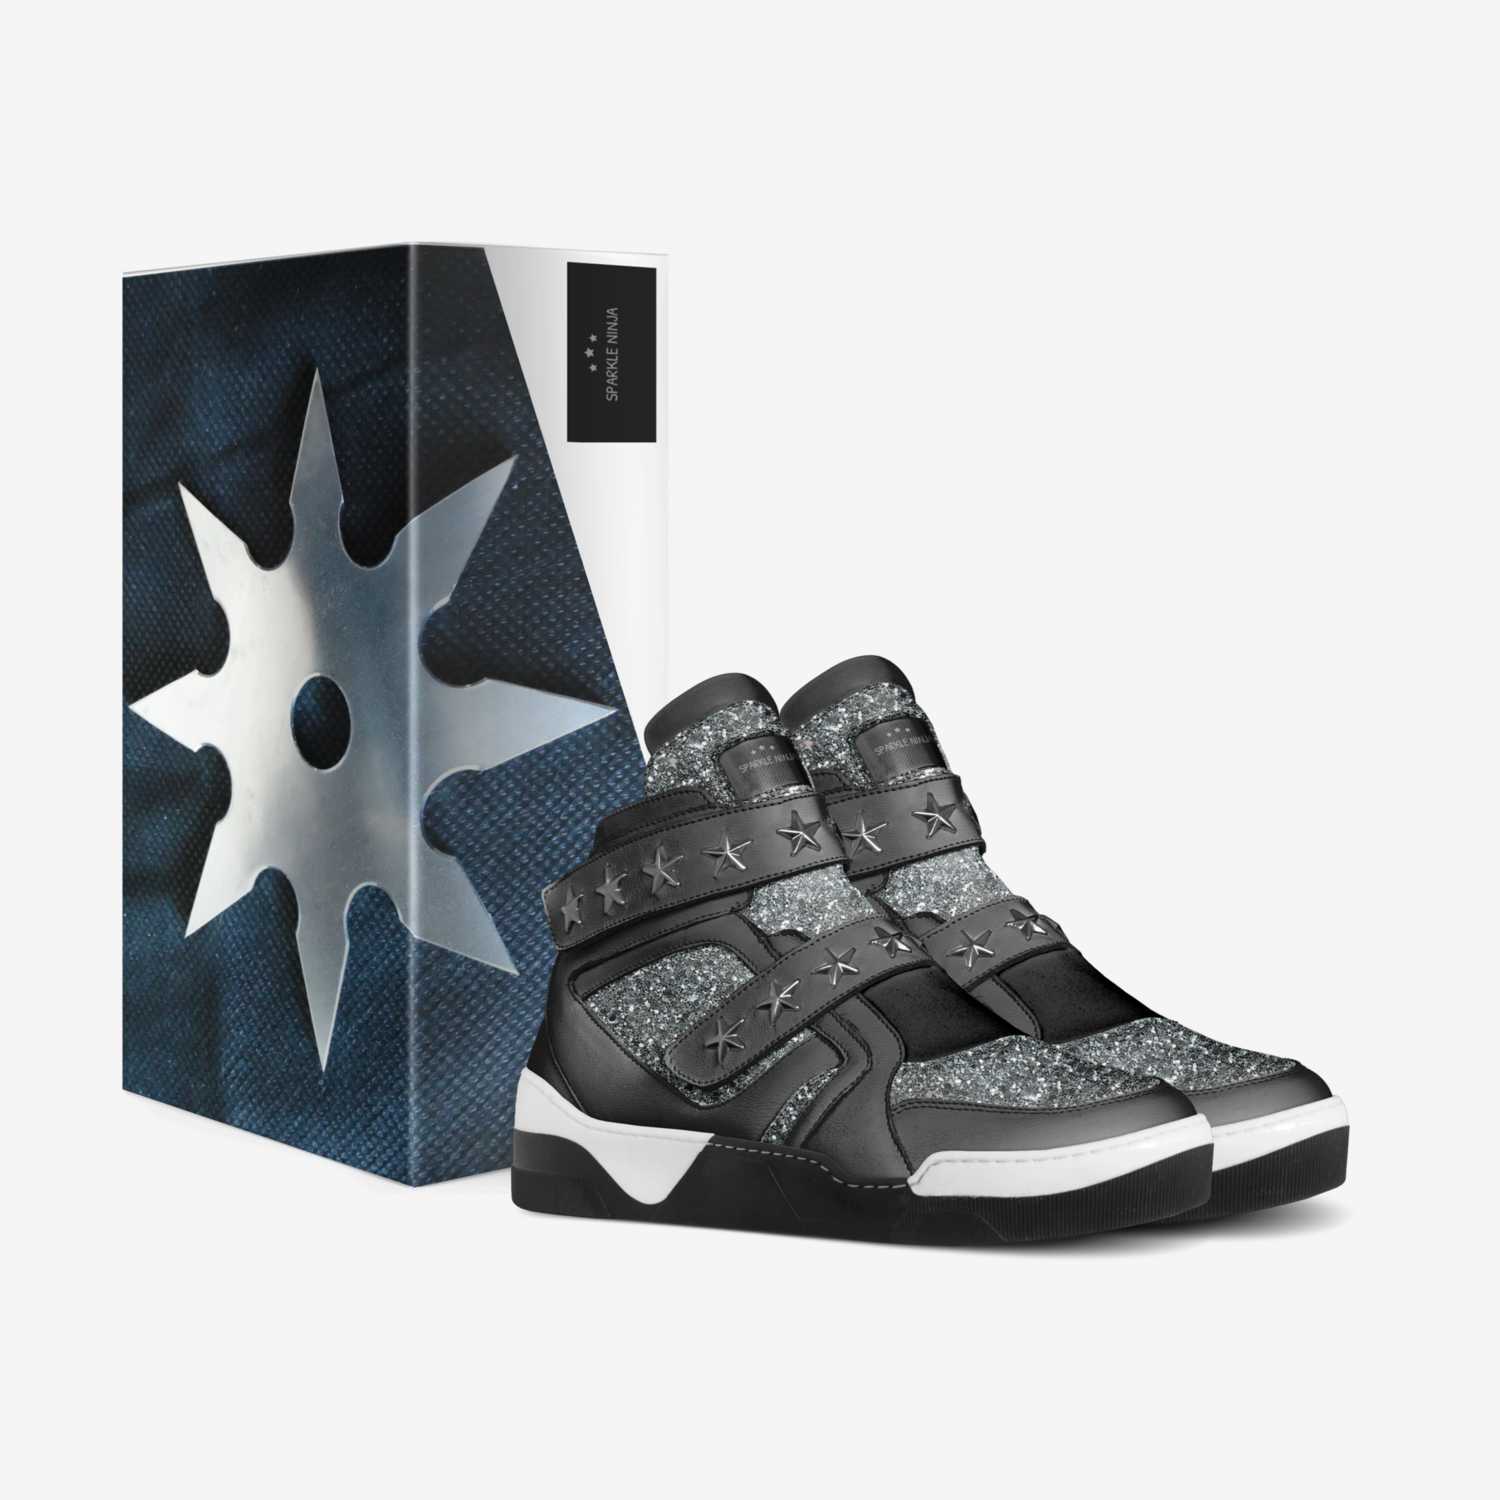 Sparkle Ninja custom made in Italy shoes by Andrew Aquino | Box view